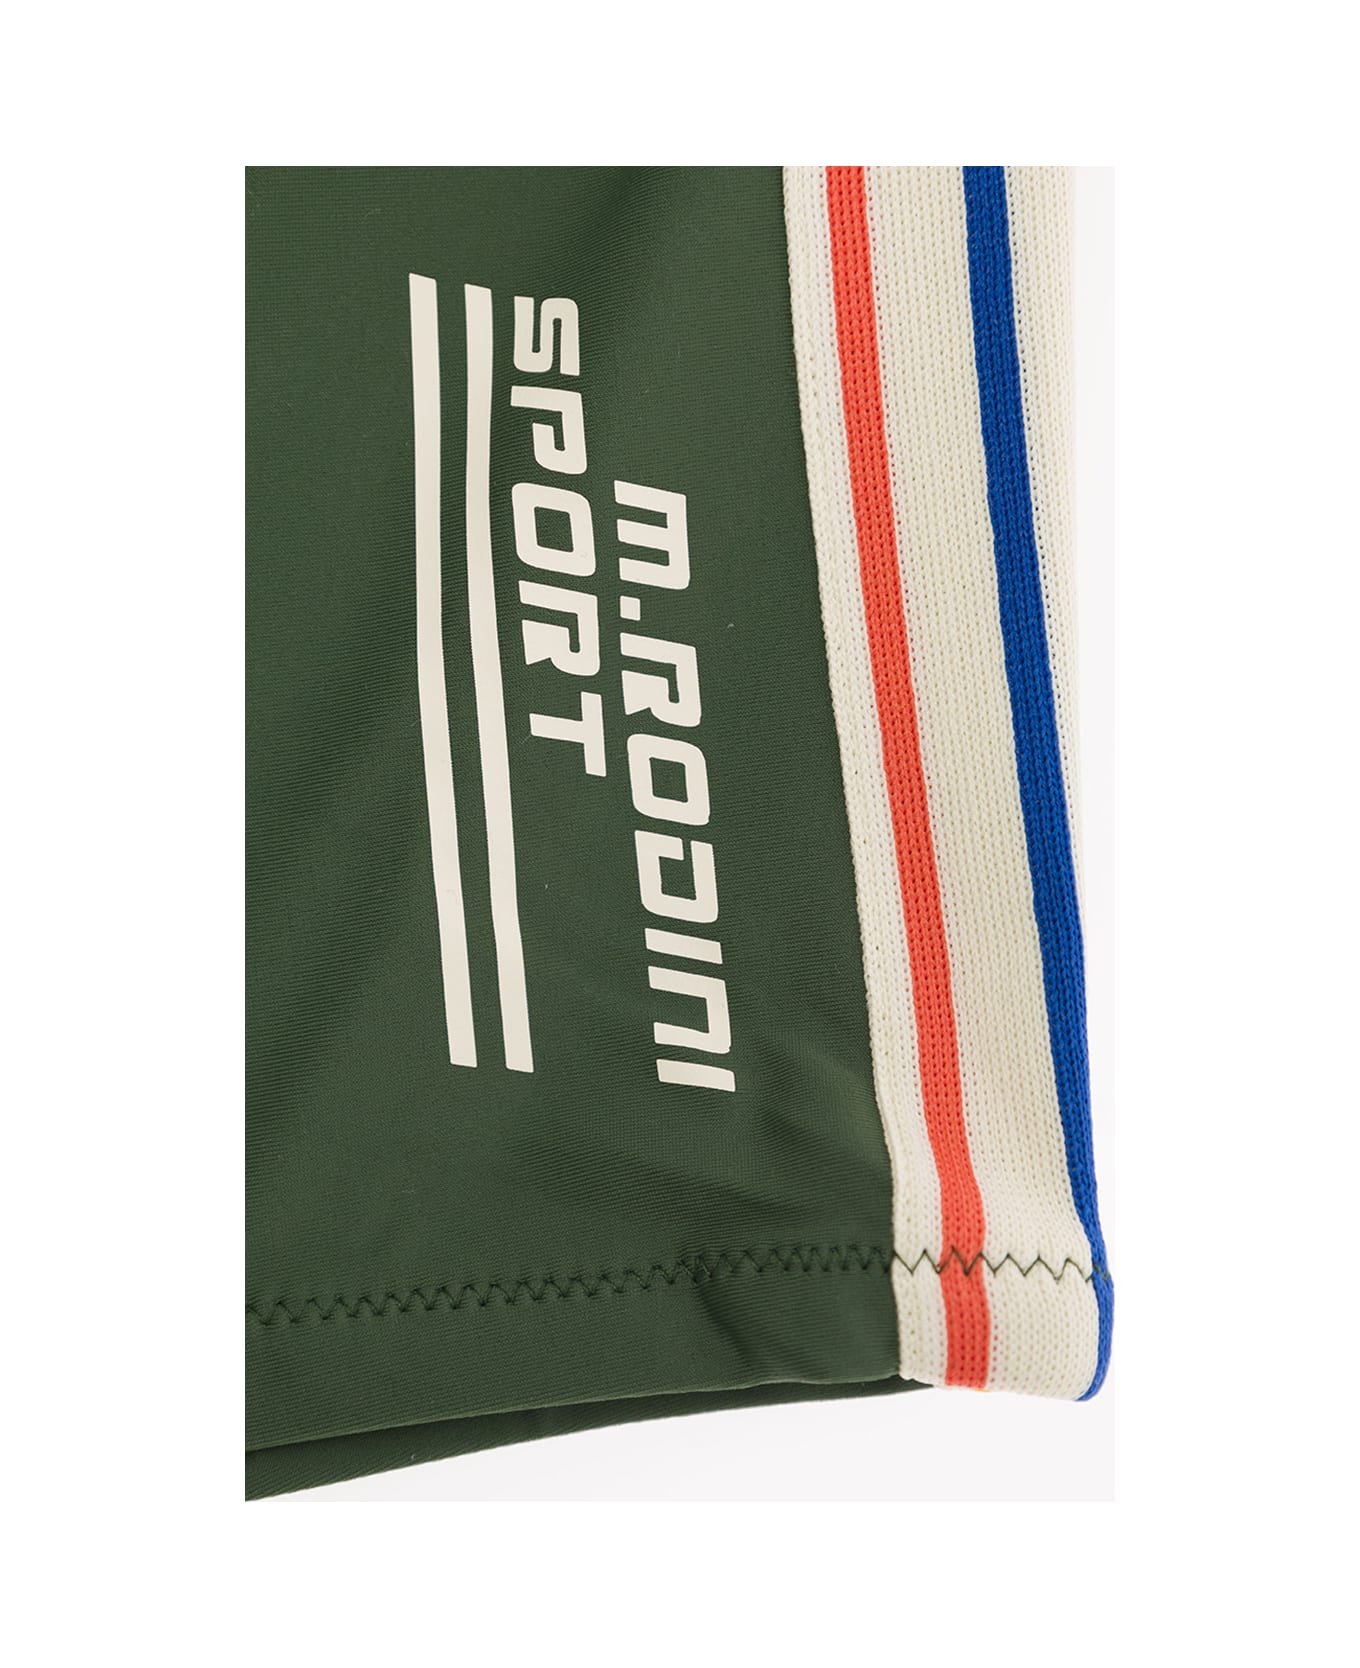 Mini Rodini Sport Swim Pants - Green